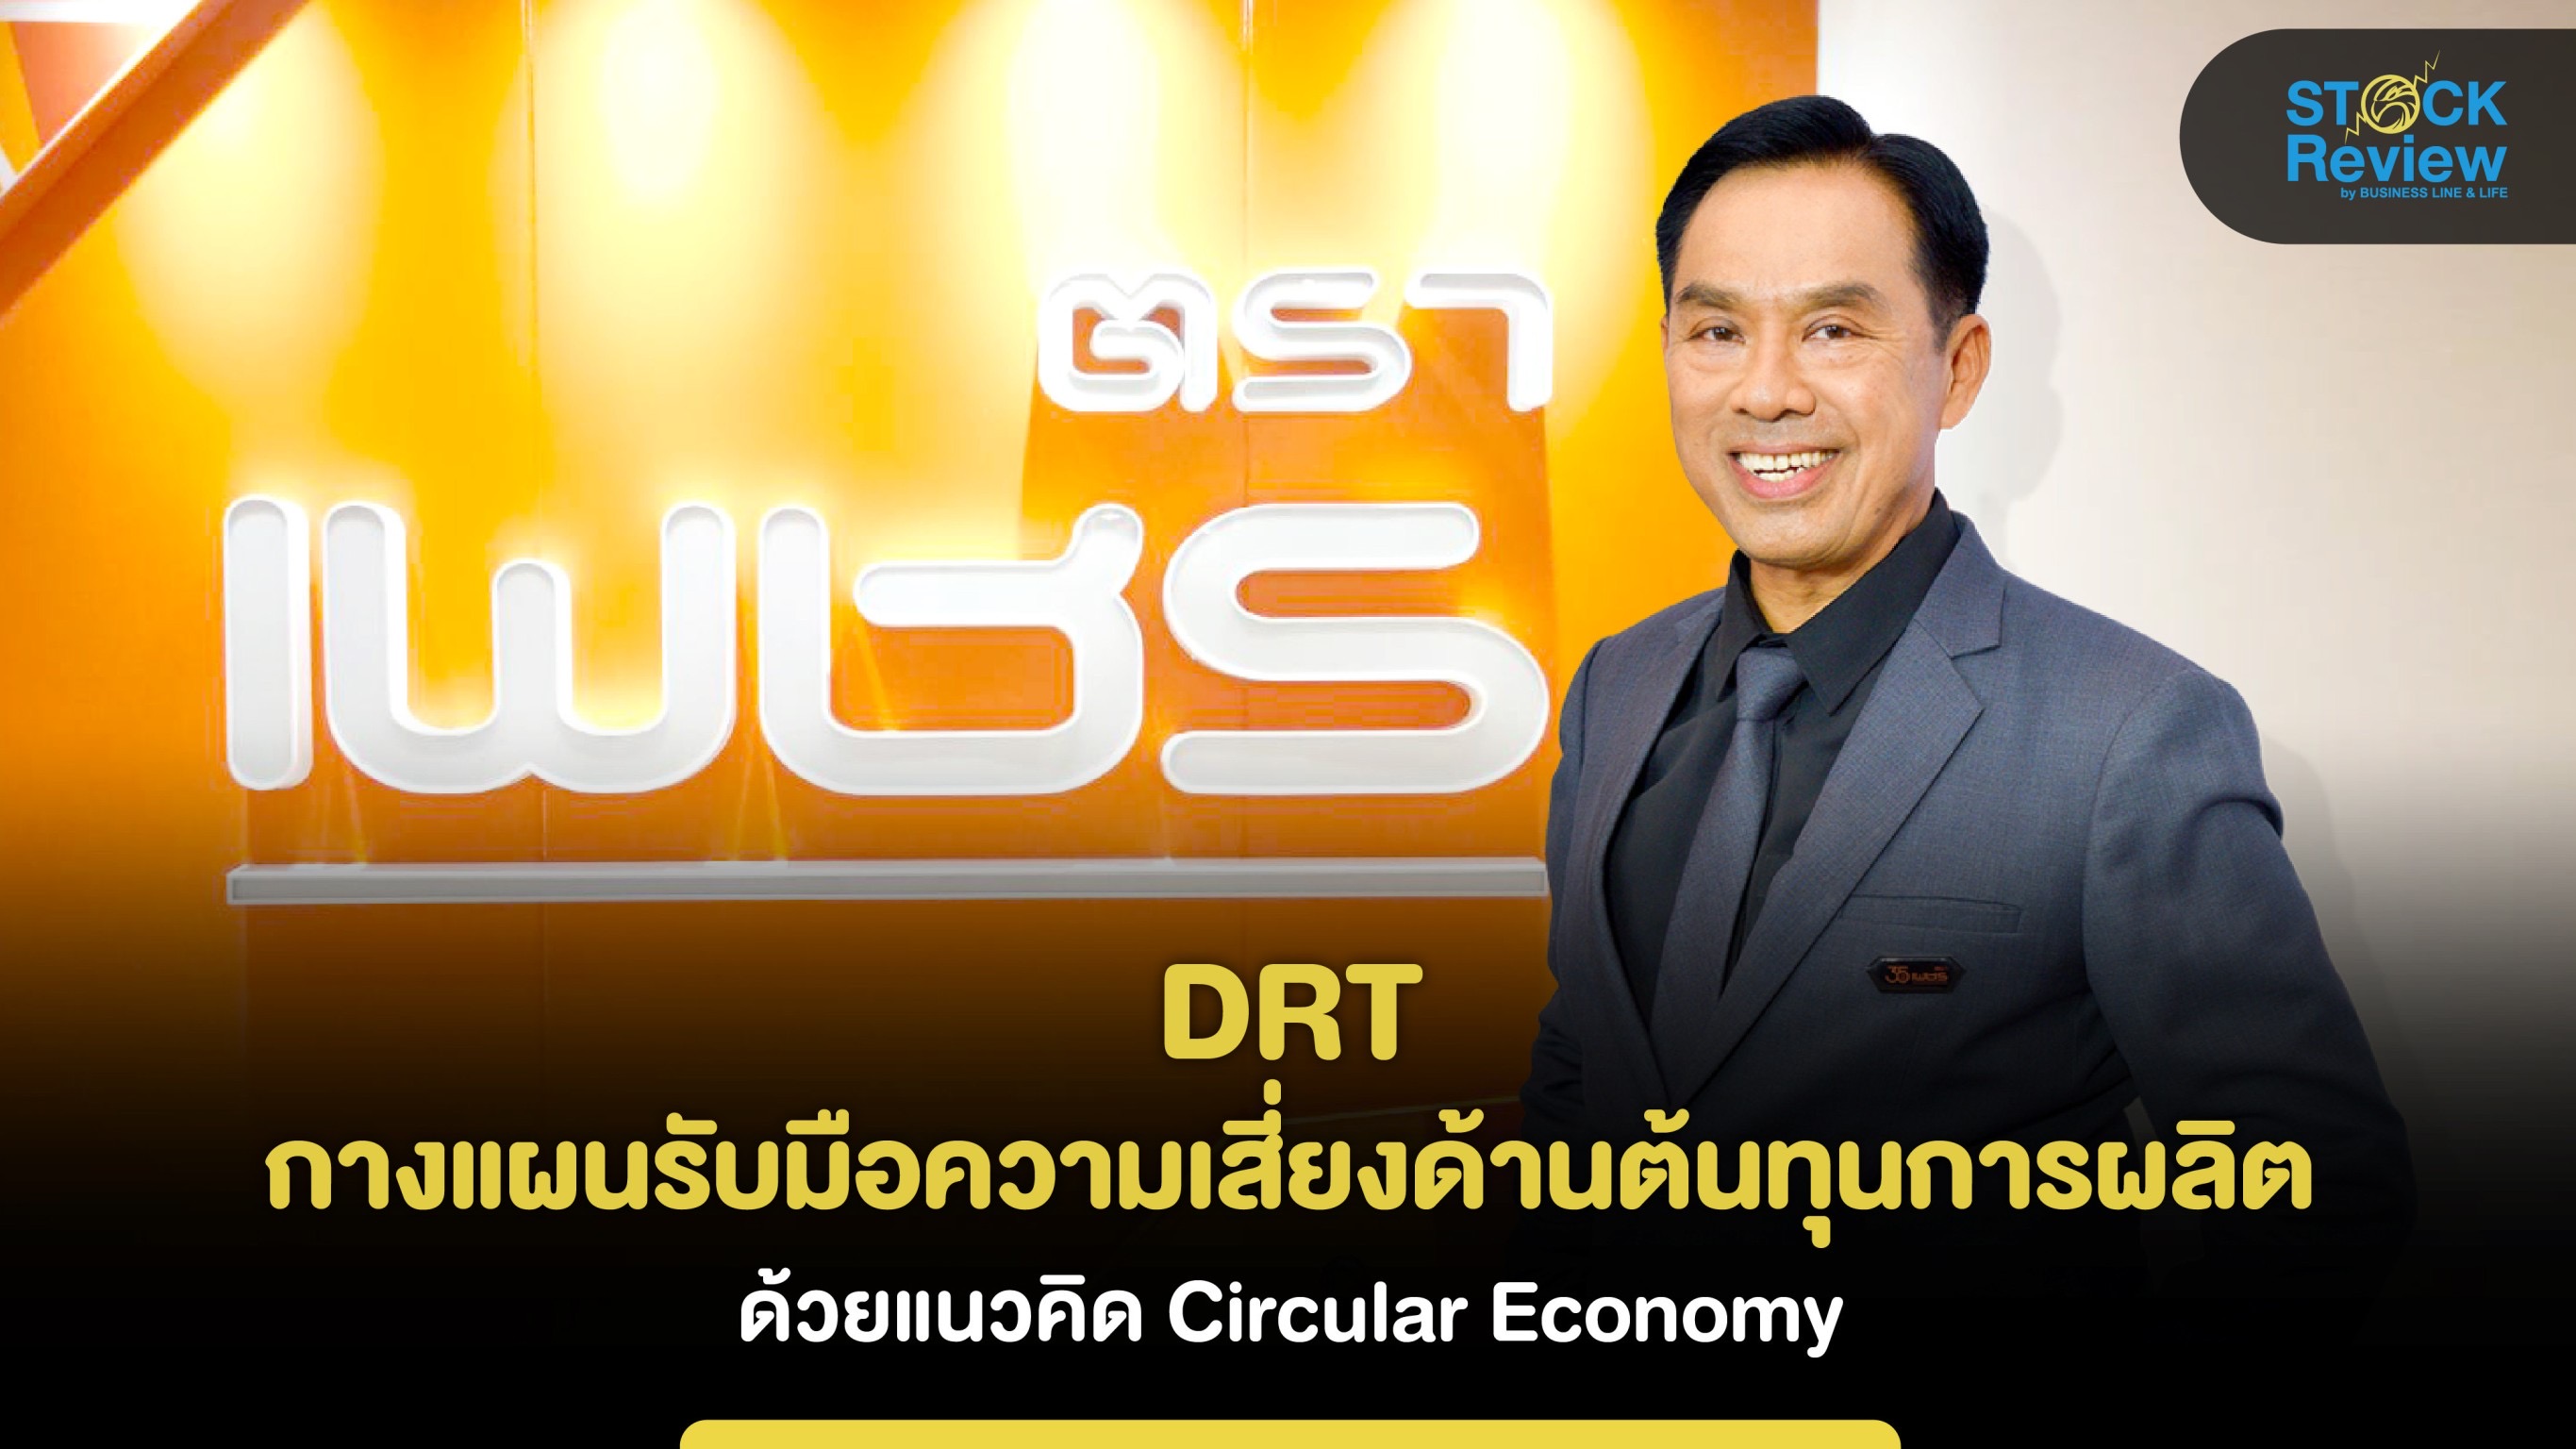 DRT กางแผนรับมือความเสี่ยงด้านต้นทุนการผลิต ด้วยแนวคิด Circular Economy